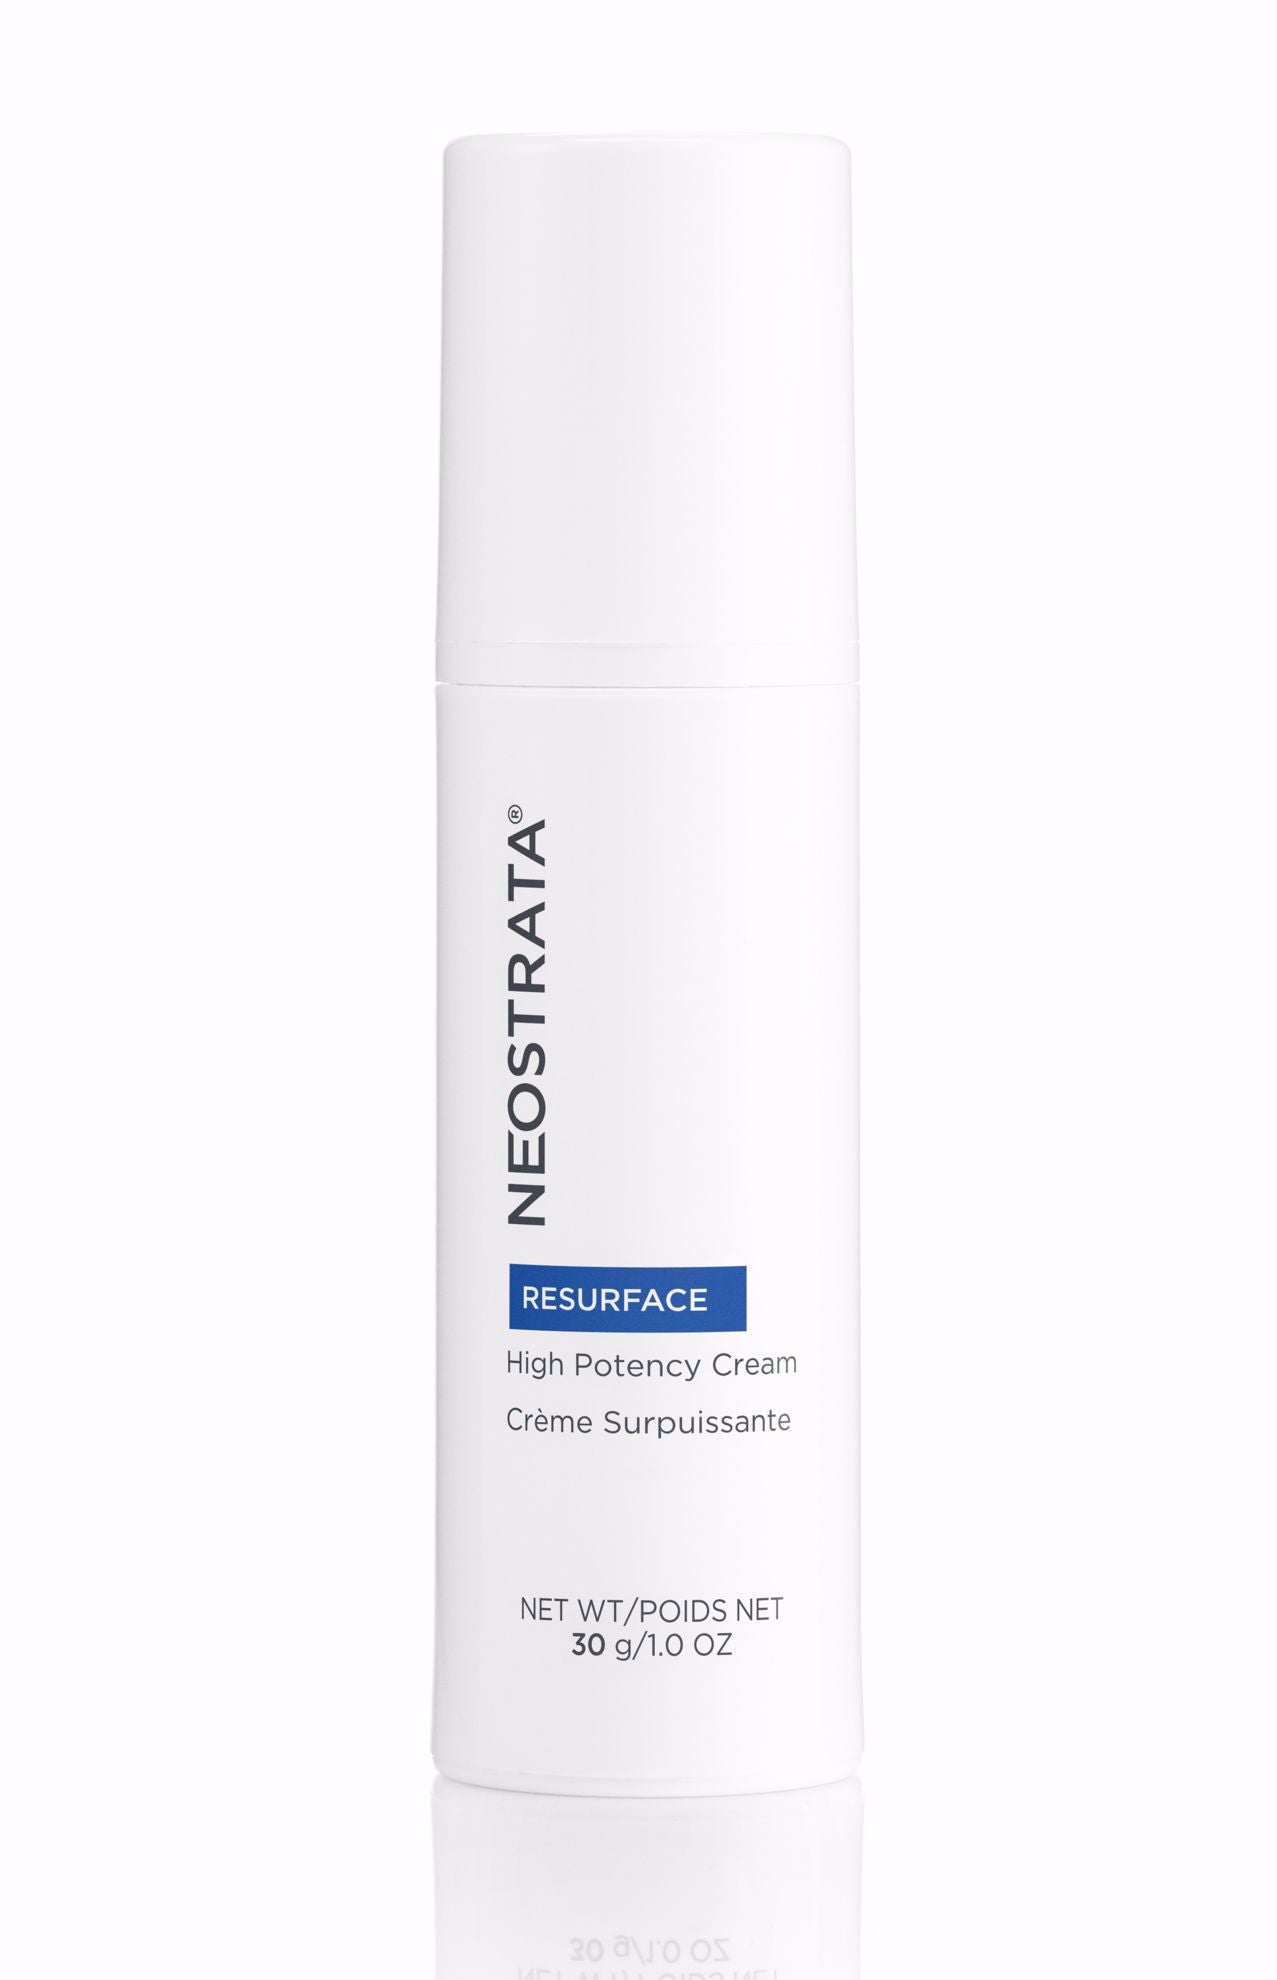 NeoStrata Resurface High Potency Cream 30g